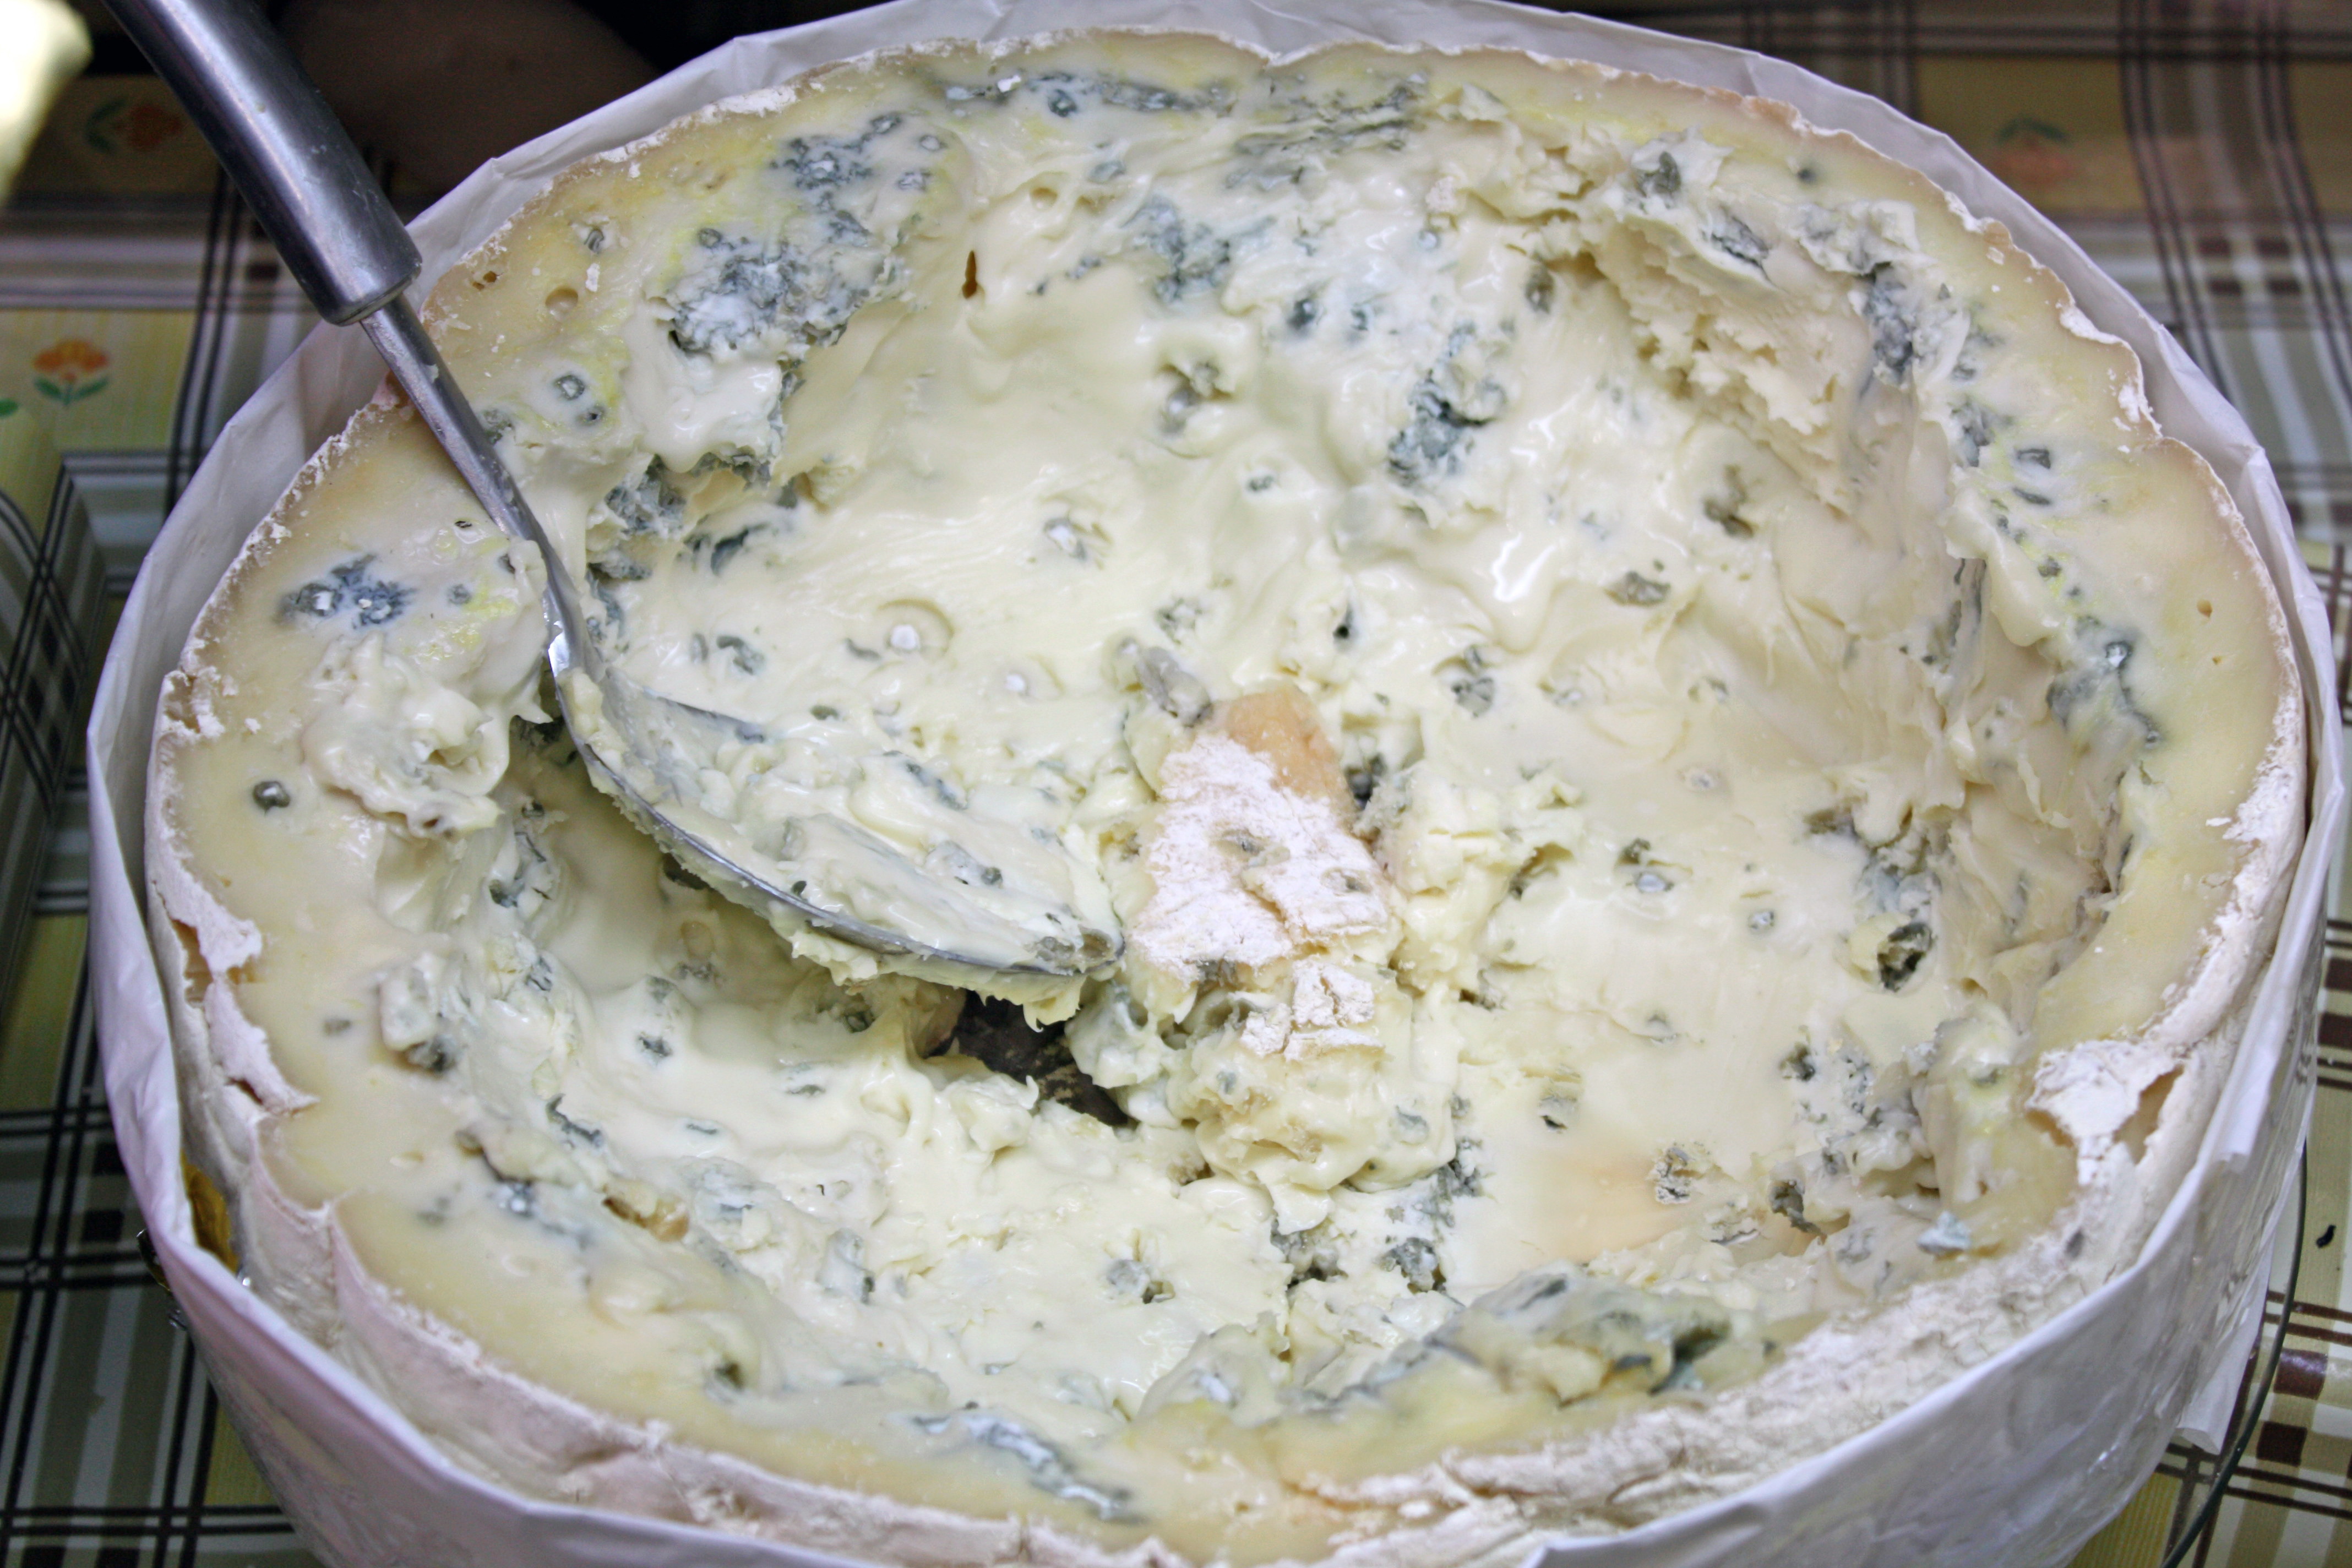 Gorgonzola cheese, Italy (SeM—UIG via Getty Images)